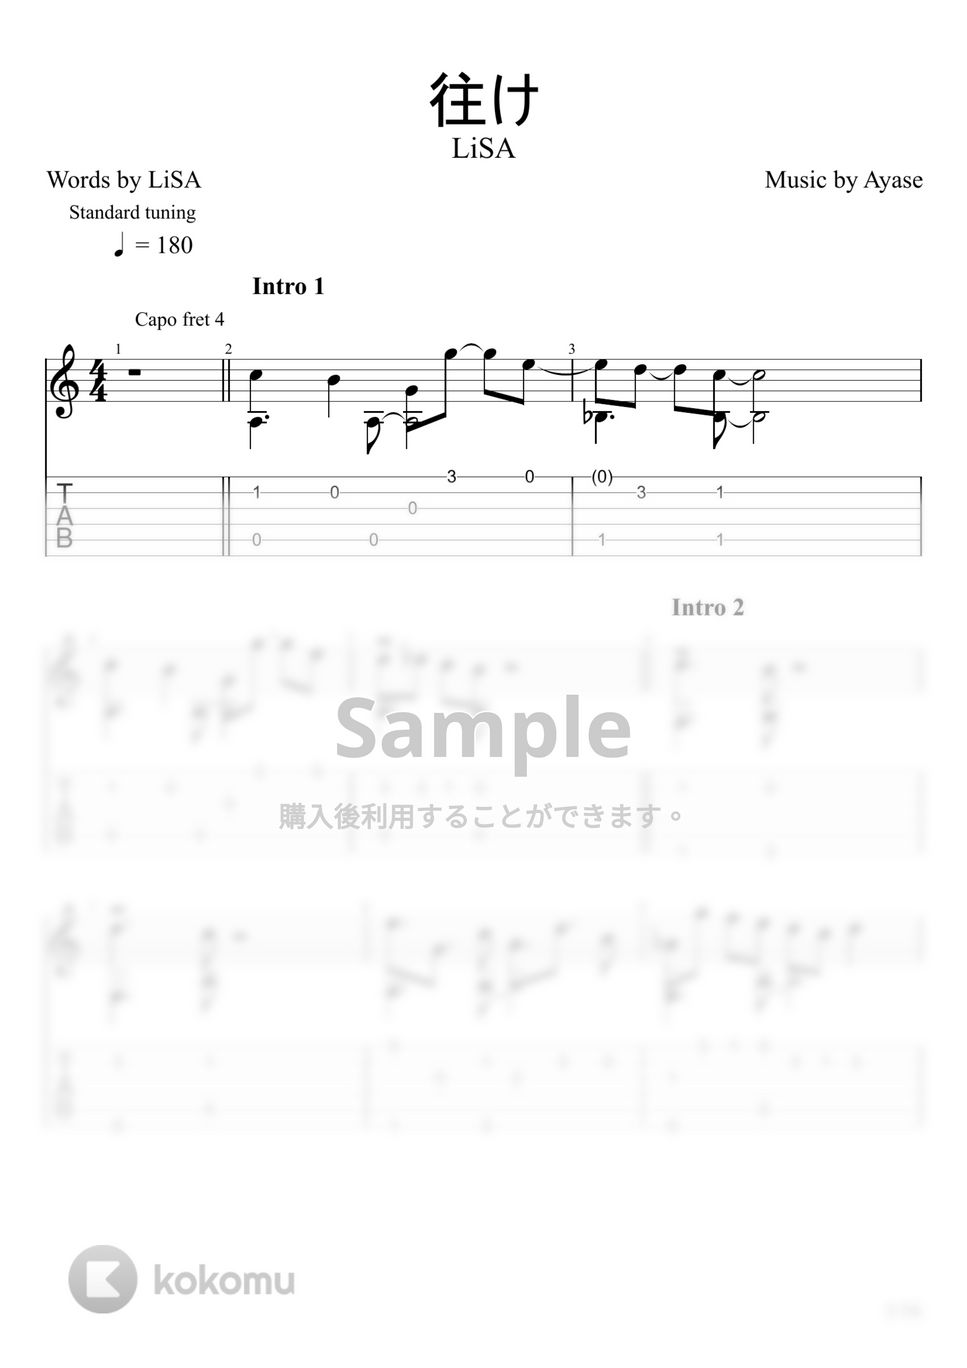 LiSA - 往け (ソロギター) by u3danchou